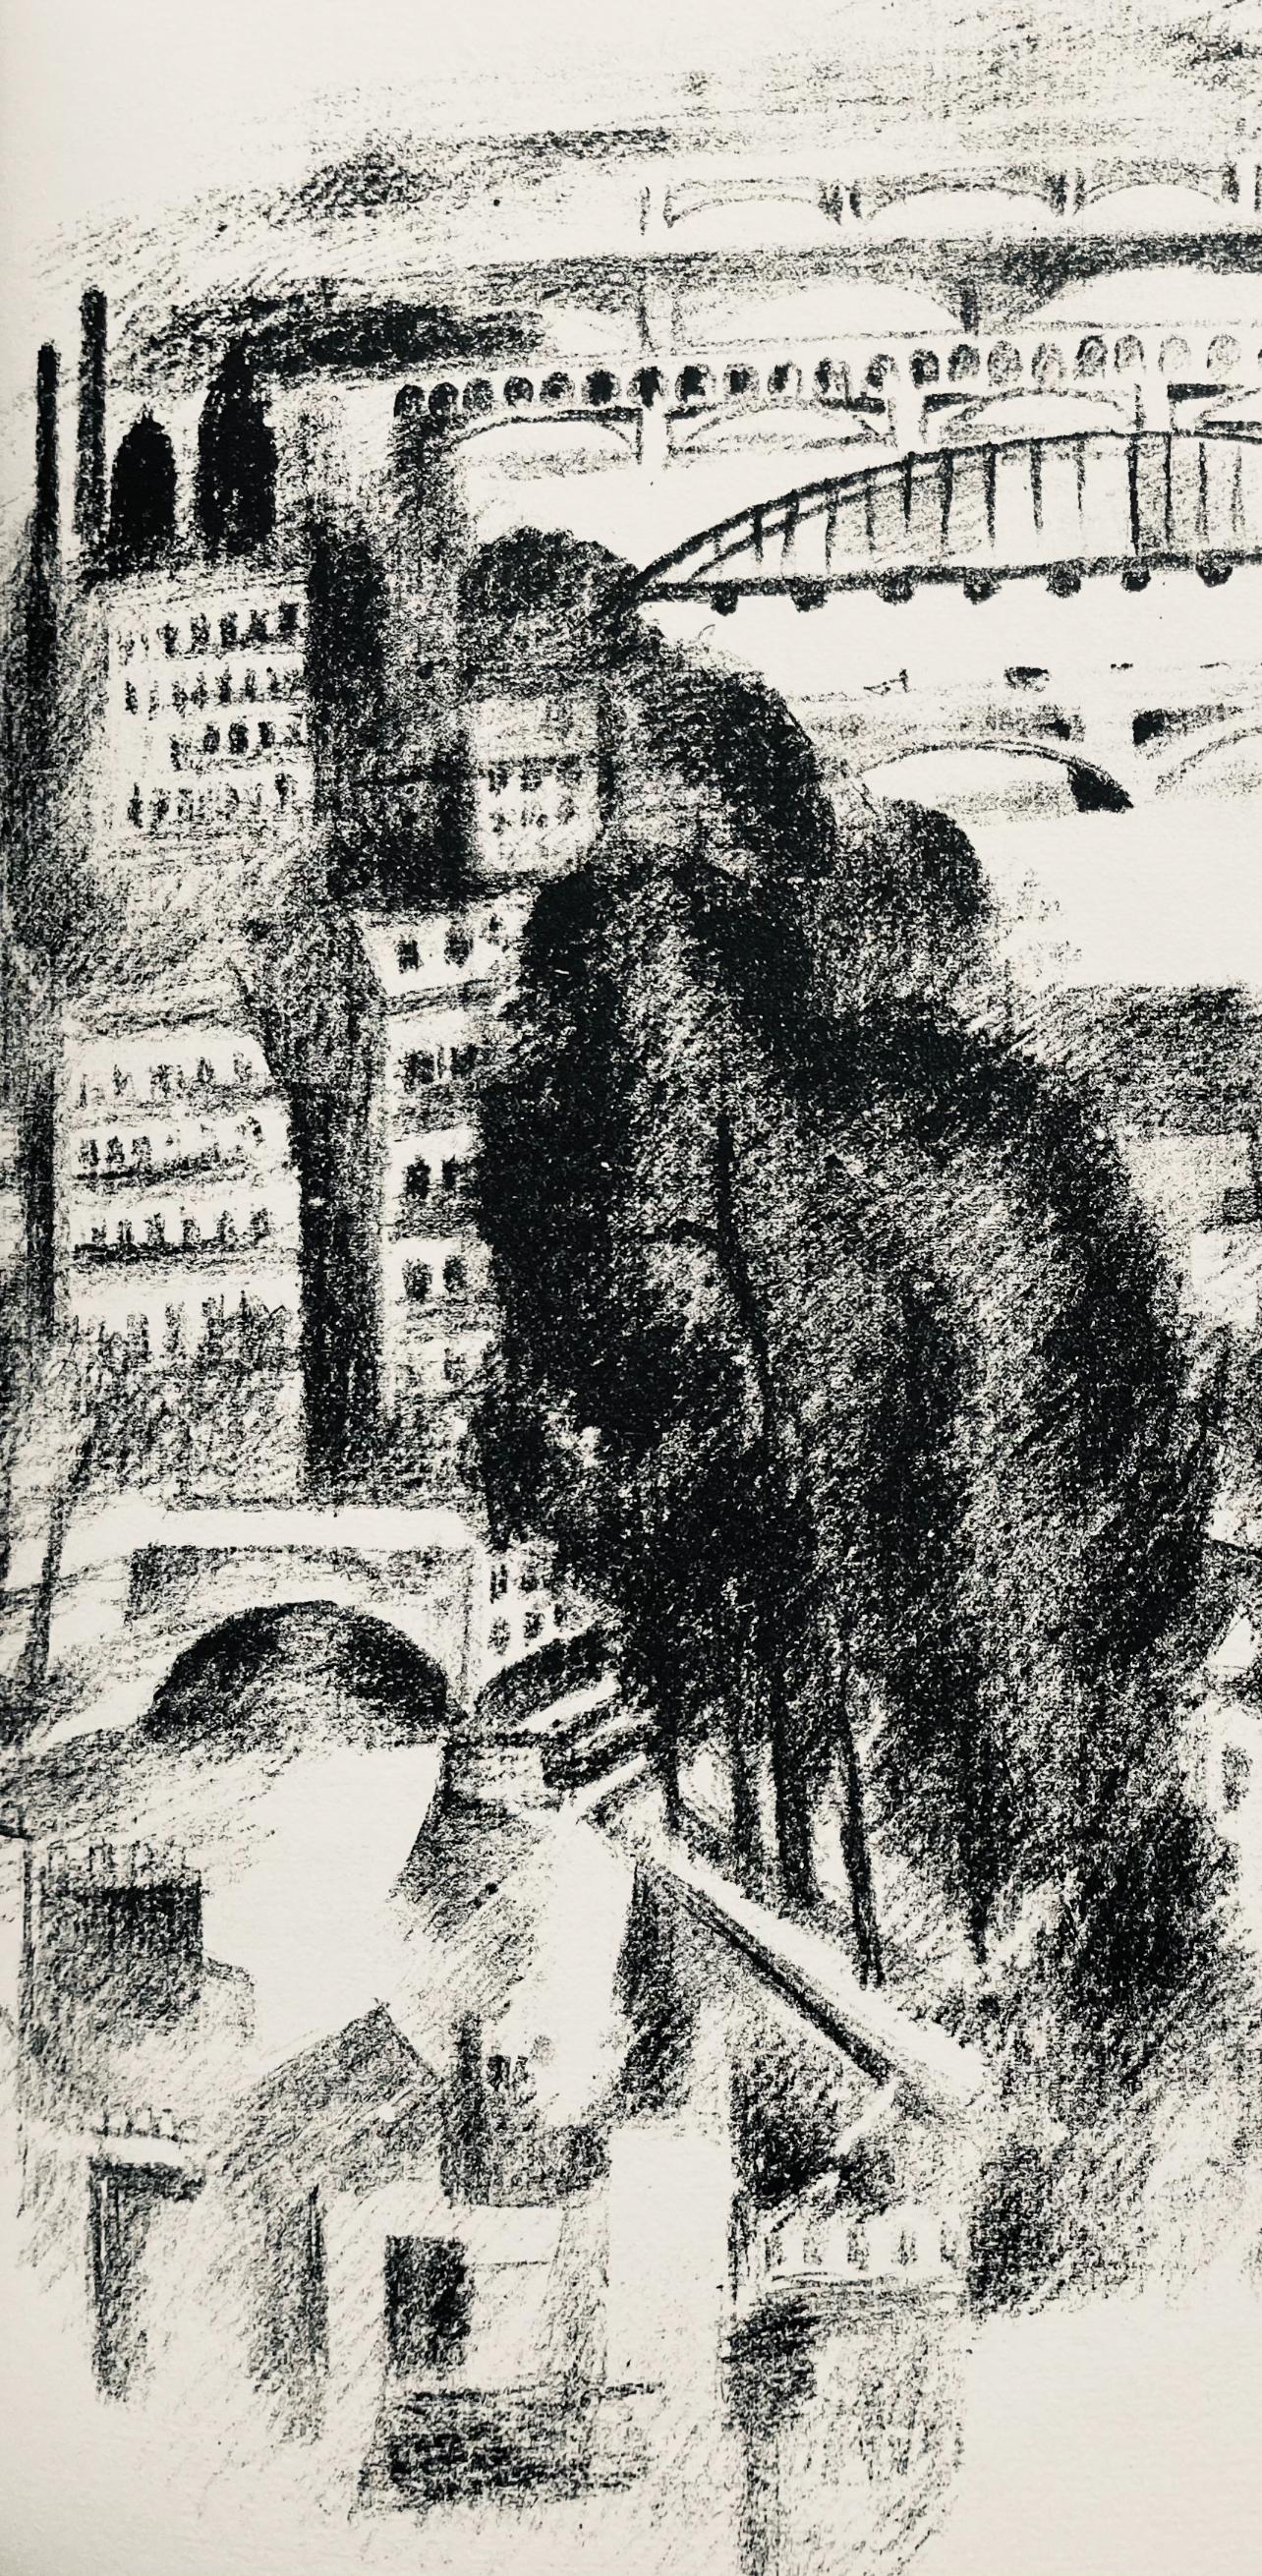 Delaunay, Ponts et passerelle de Passy (Habasque 720-728), Allo! Paris! (nach) – Print von Robert Delaunay